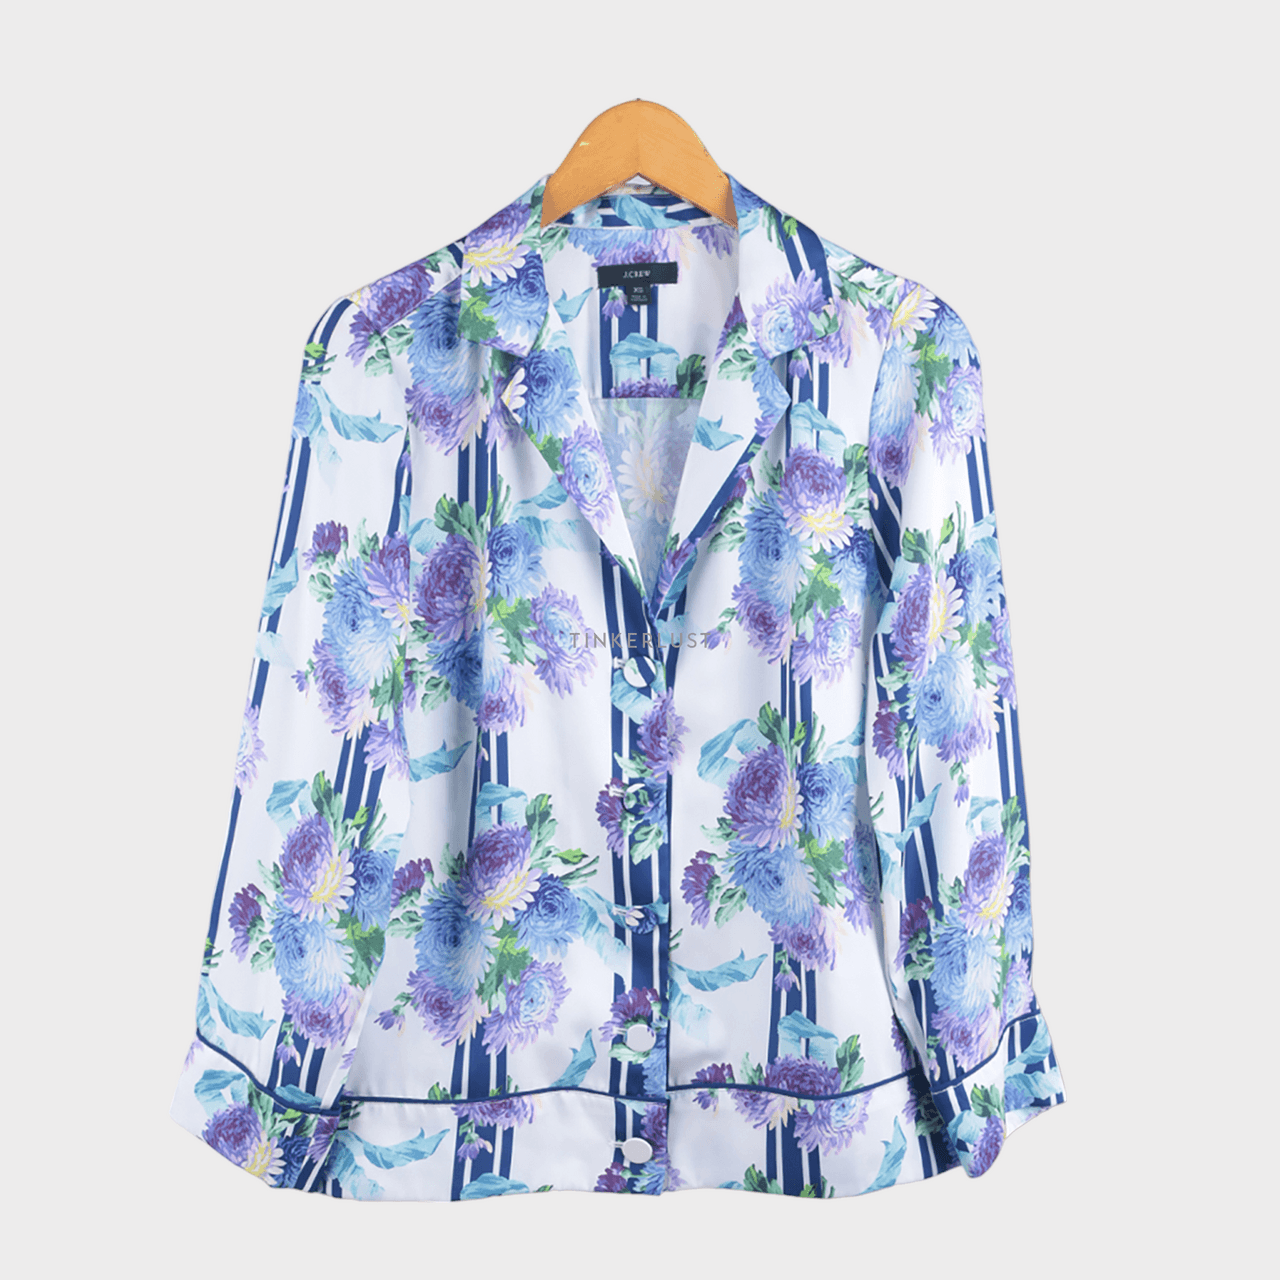 J.CREW Multi Floral Shirt